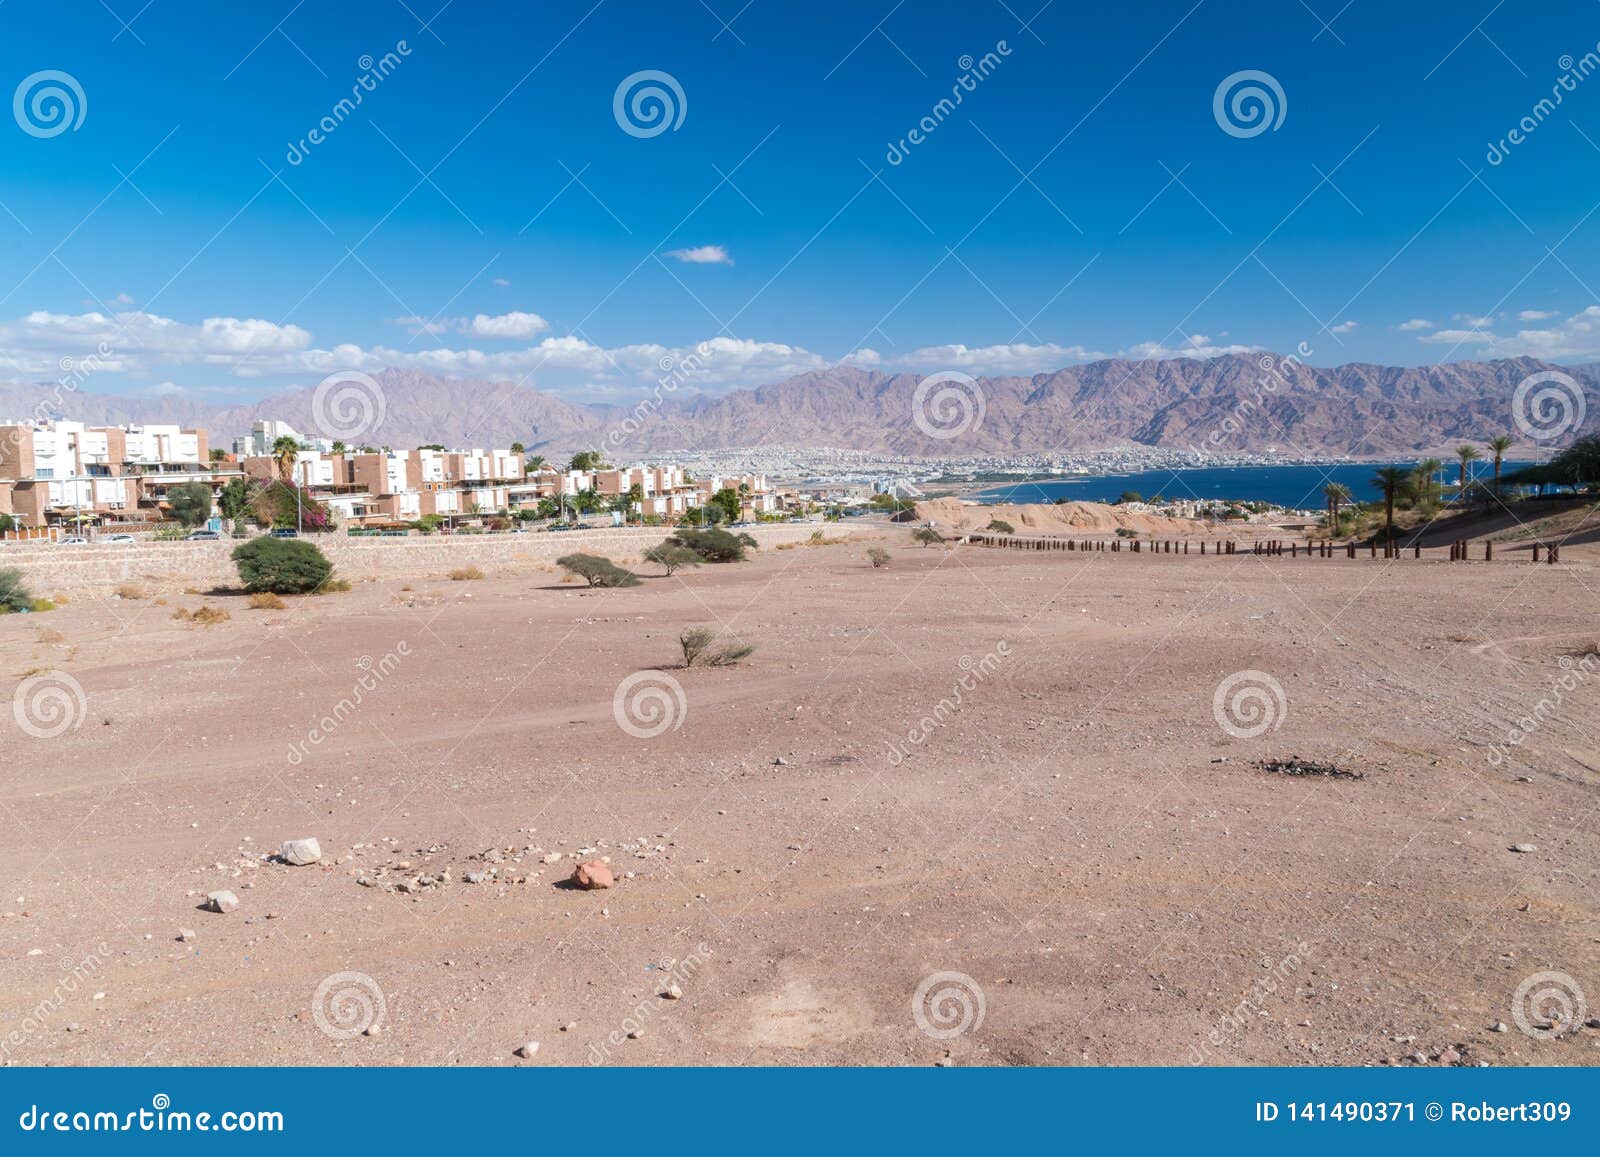 View of Eilat and Cities in Israel and Jordan Stock Image - of eilat, jordan: 141490371